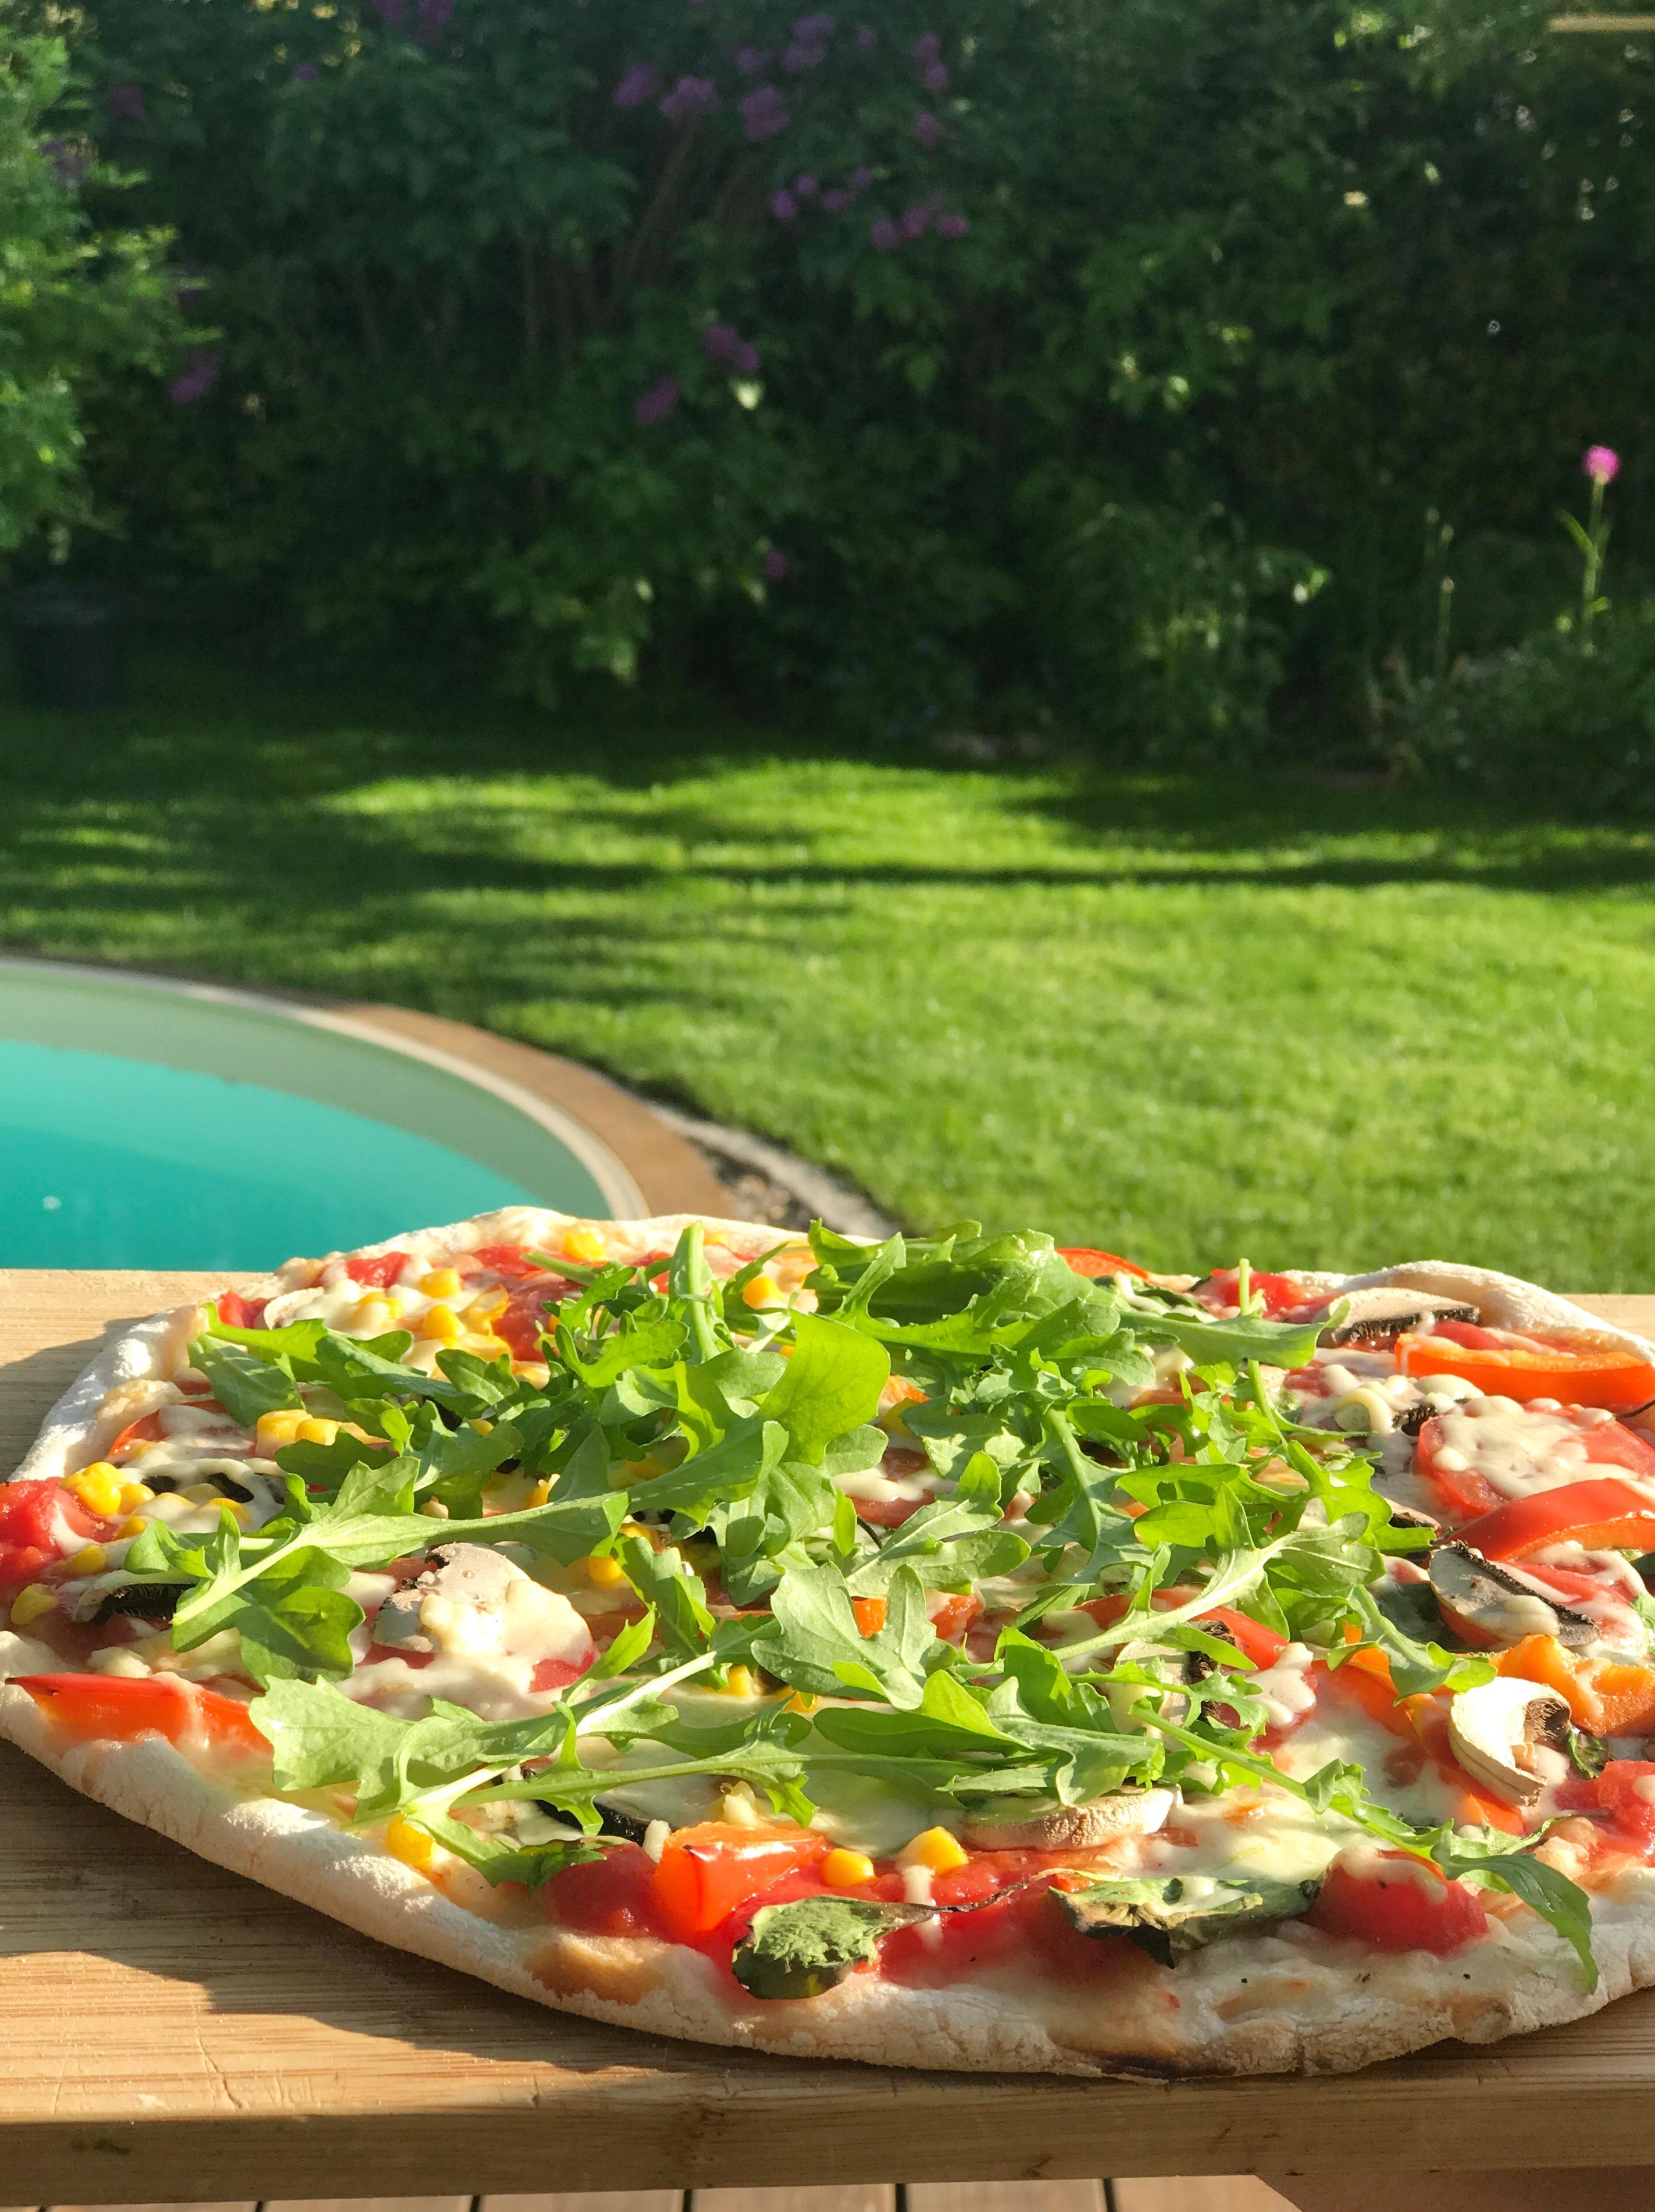 Lieblinggspizza!

#garten #gartenpool #pizza #homemade #outdoorliving #sommerküche #yummi 